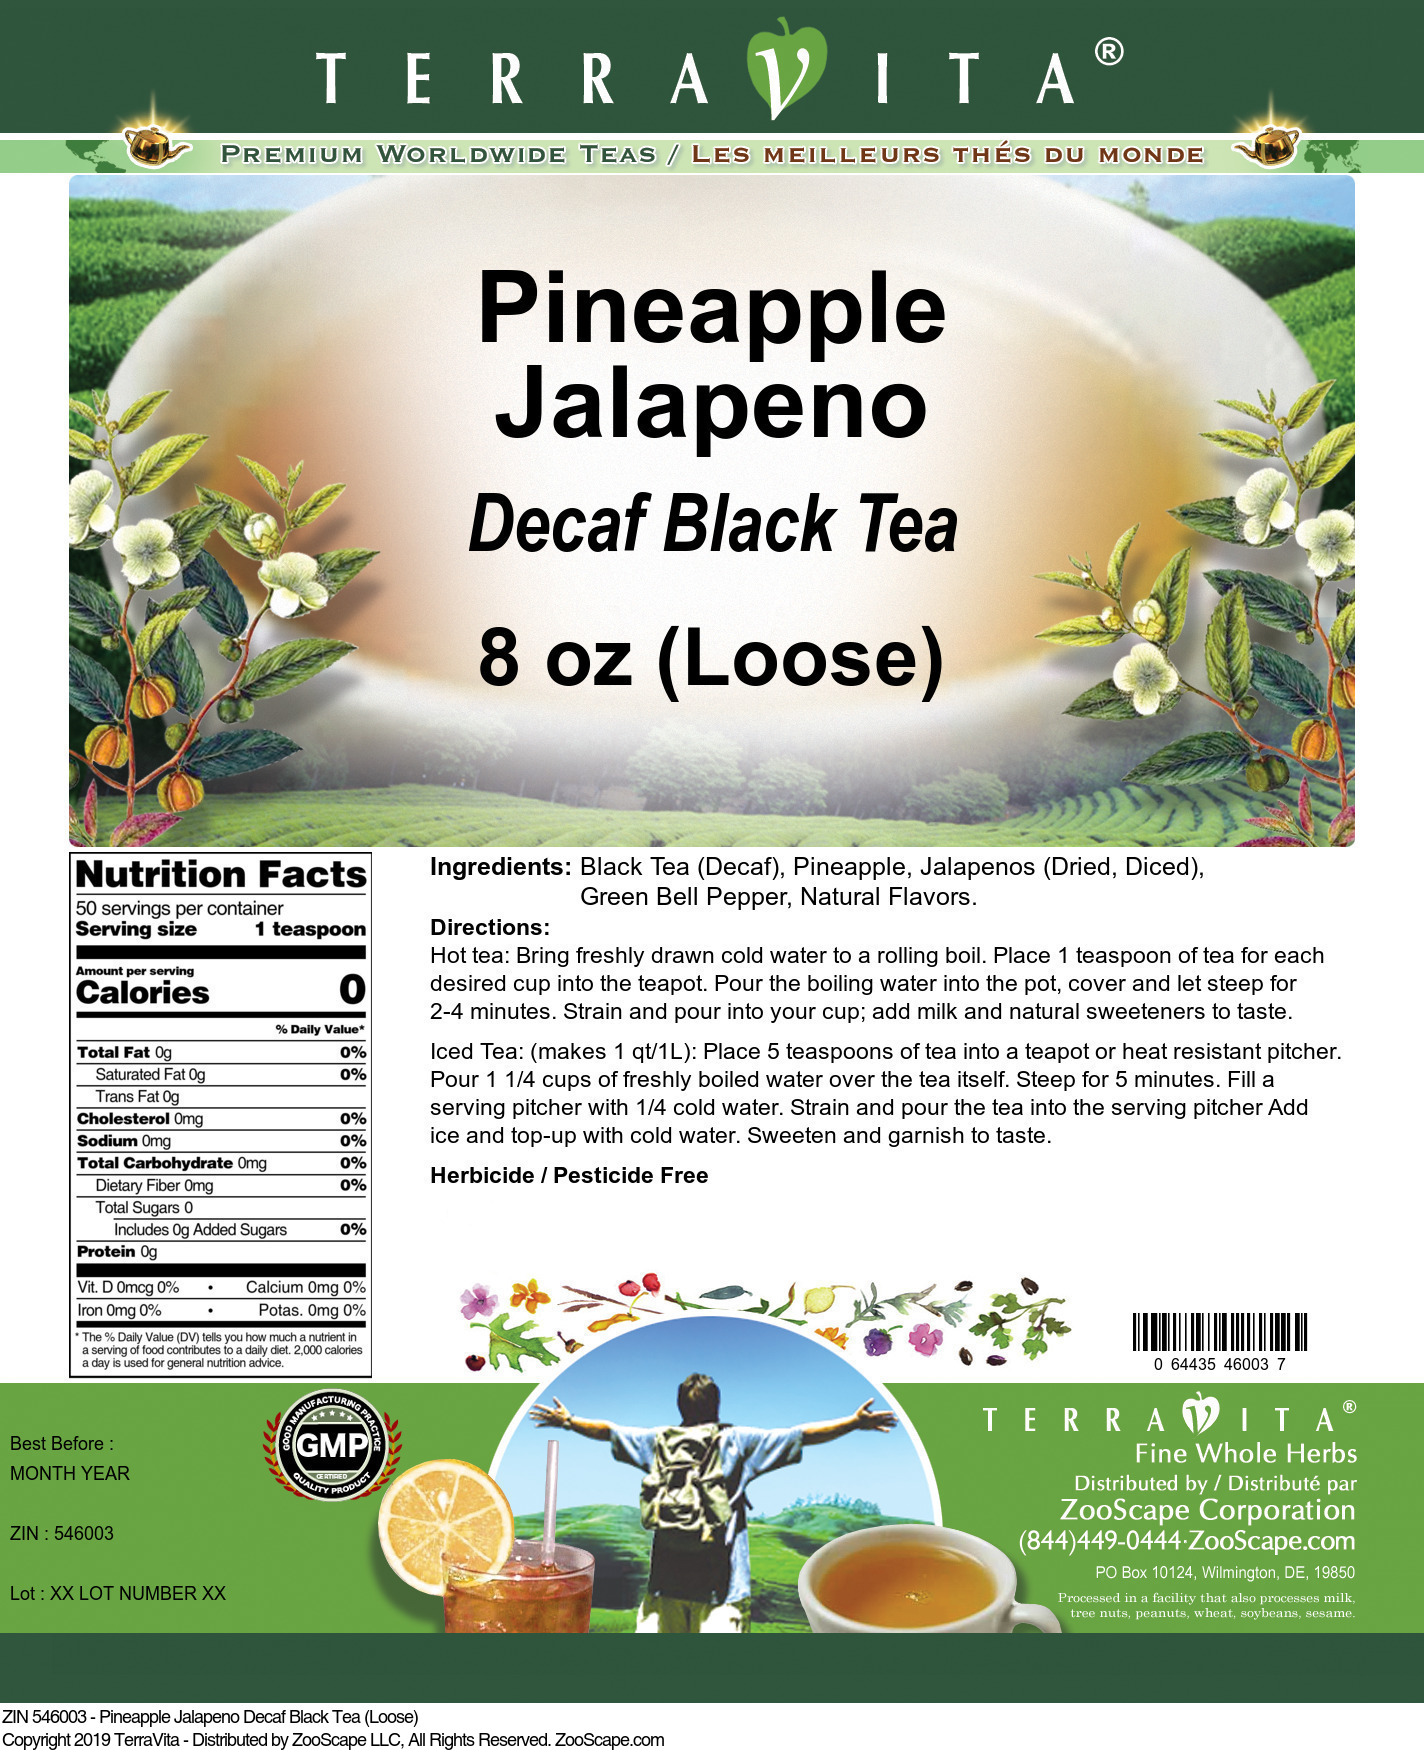 Pineapple Jalapeno Decaf Black Tea (Loose) - Label